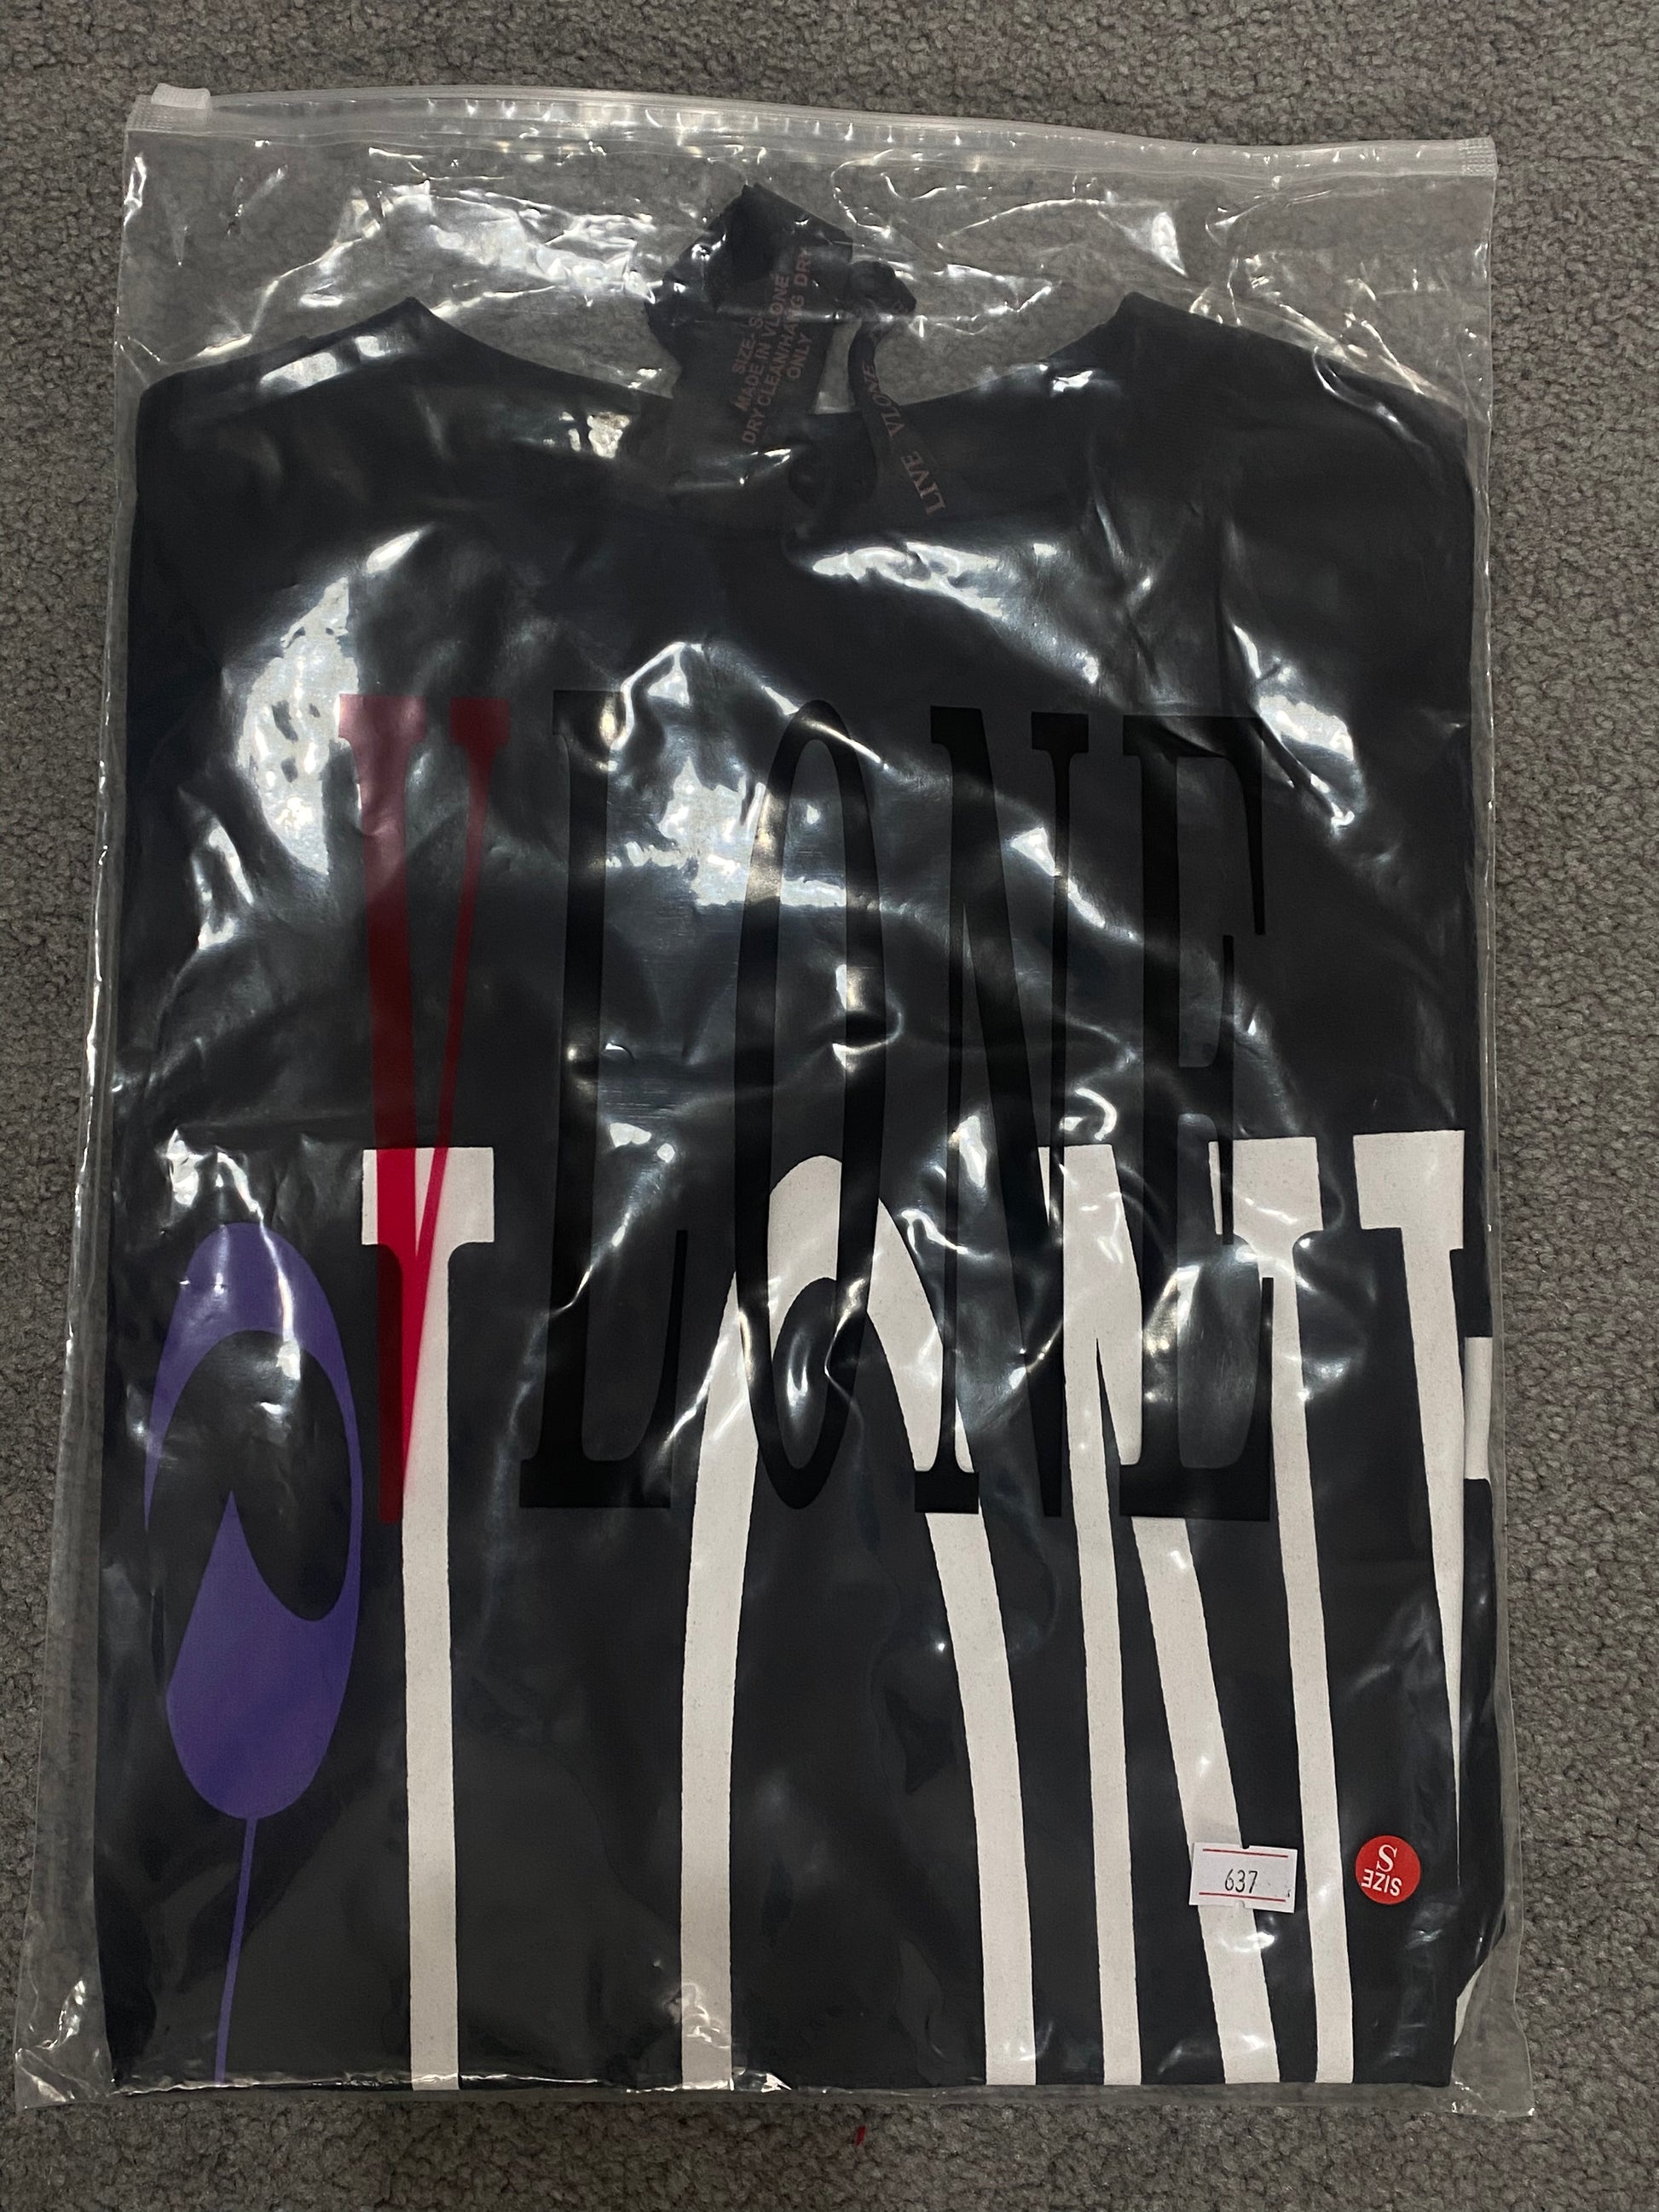 Vlone x Palm Angels Logo T-Shirt 'Black/Purple' S